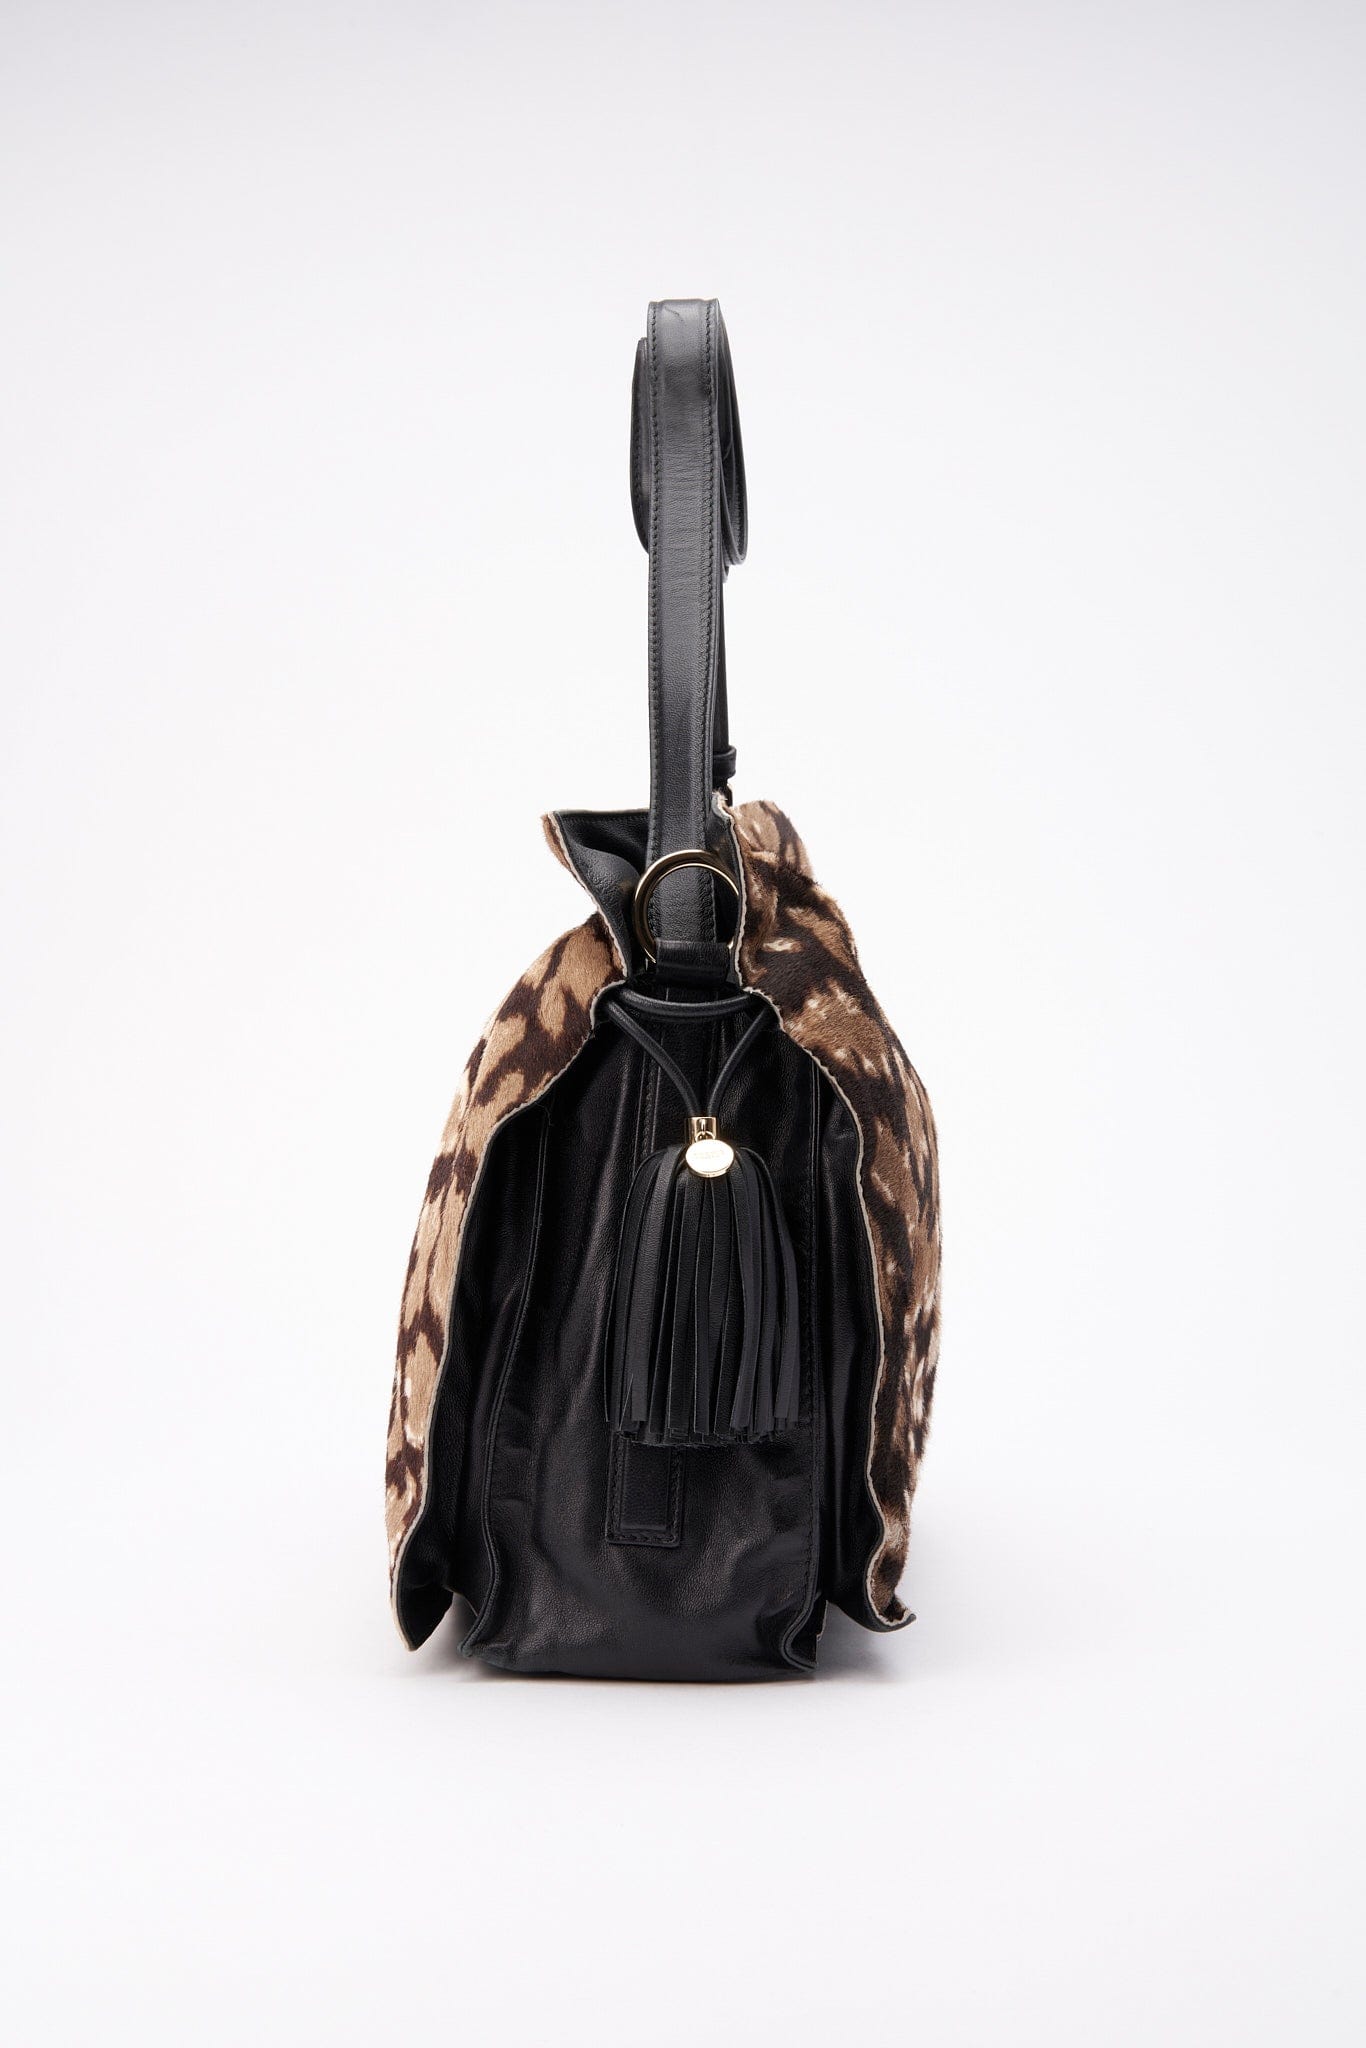 Loewe Flamenco in a Leopard Printed Calf Hair